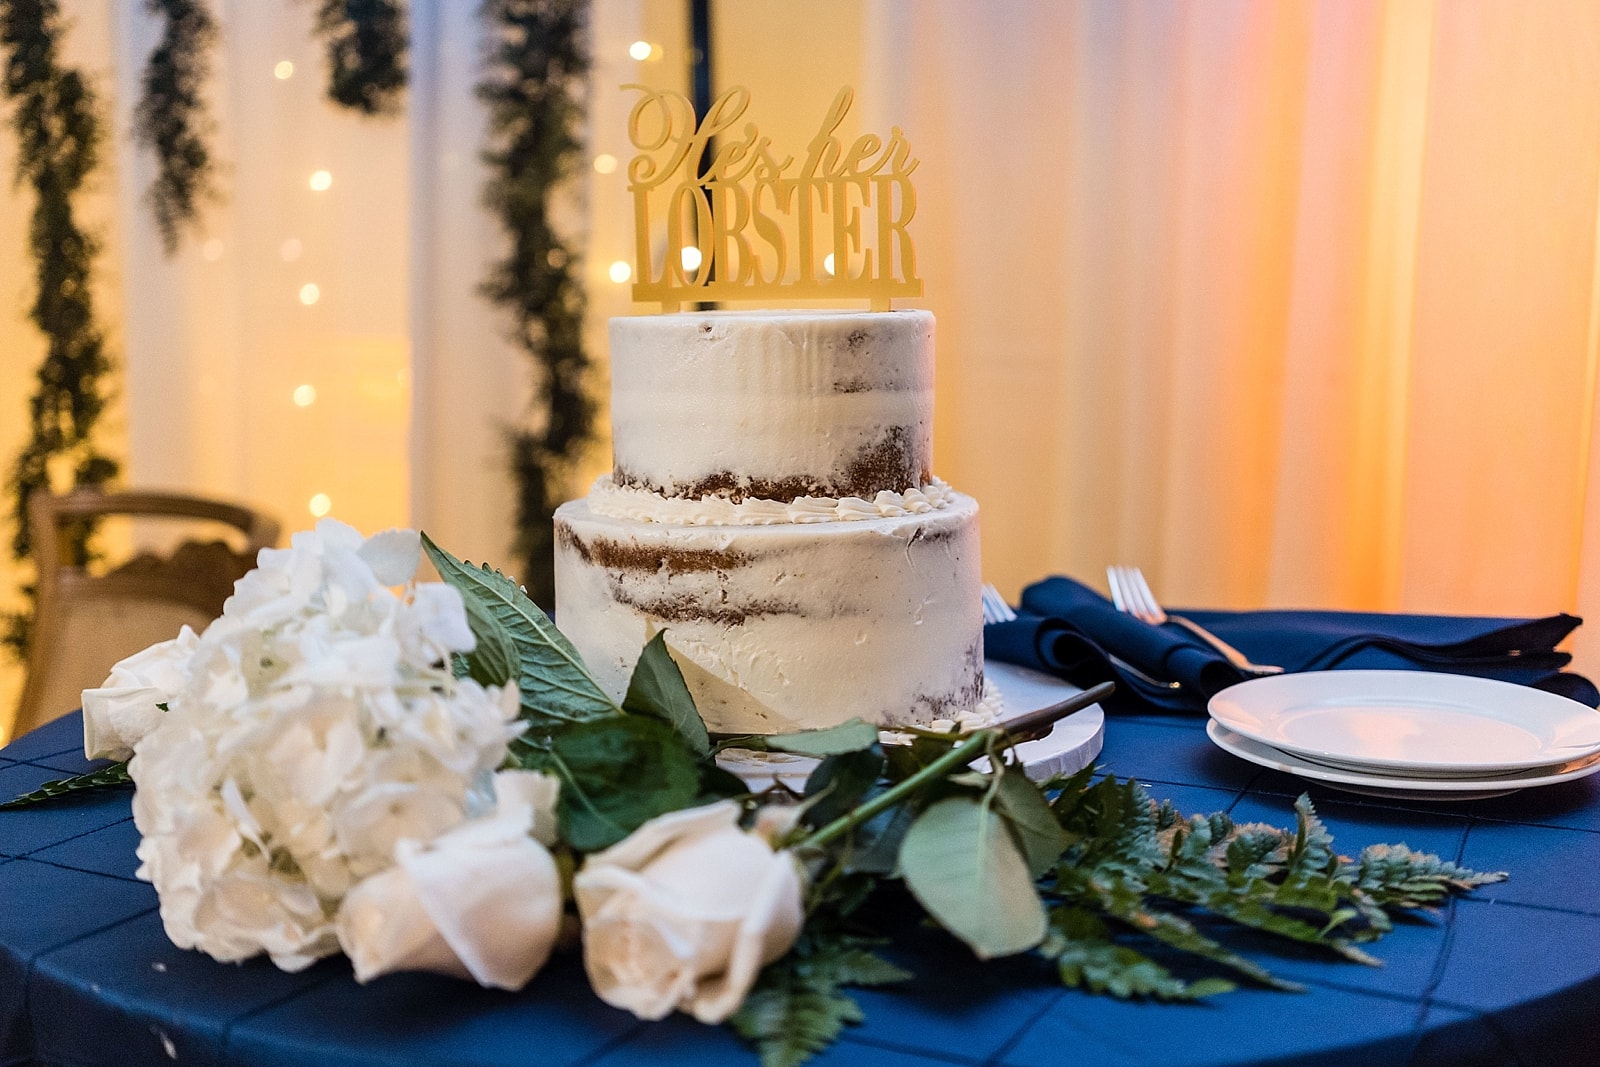 Friends-inspired "He's her Lobster" wedding cake topper